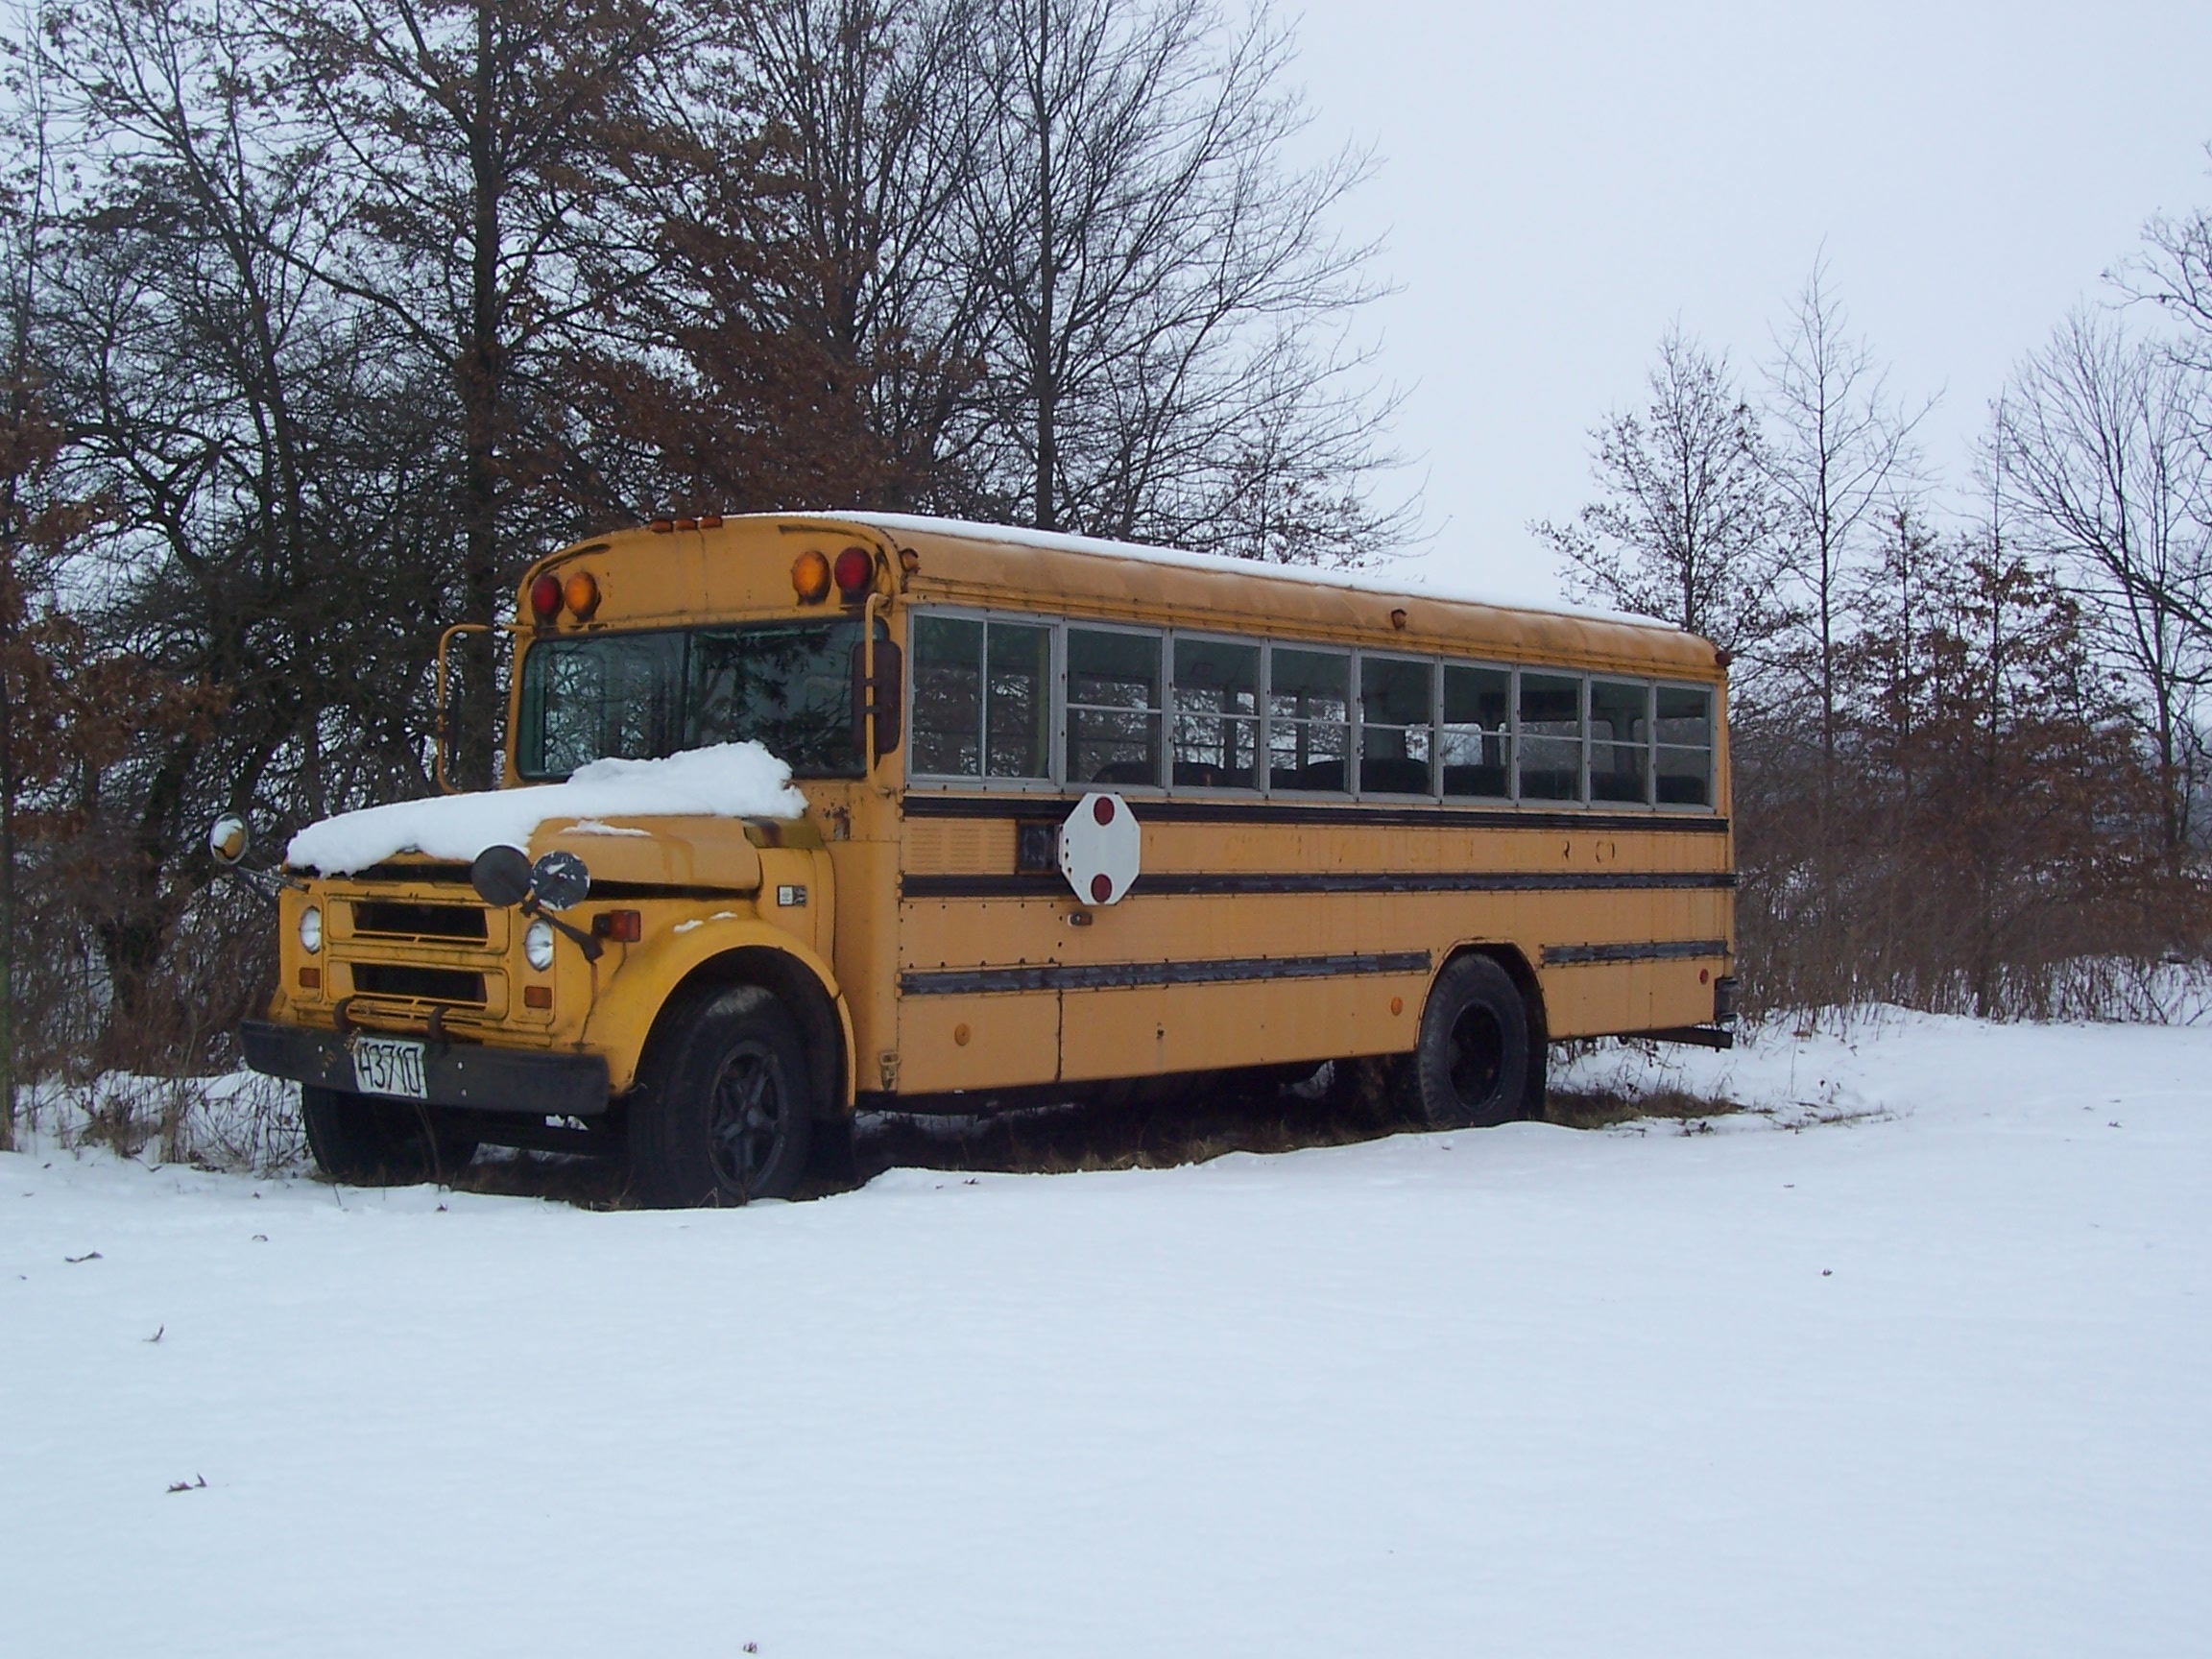 Random school bus in the yard